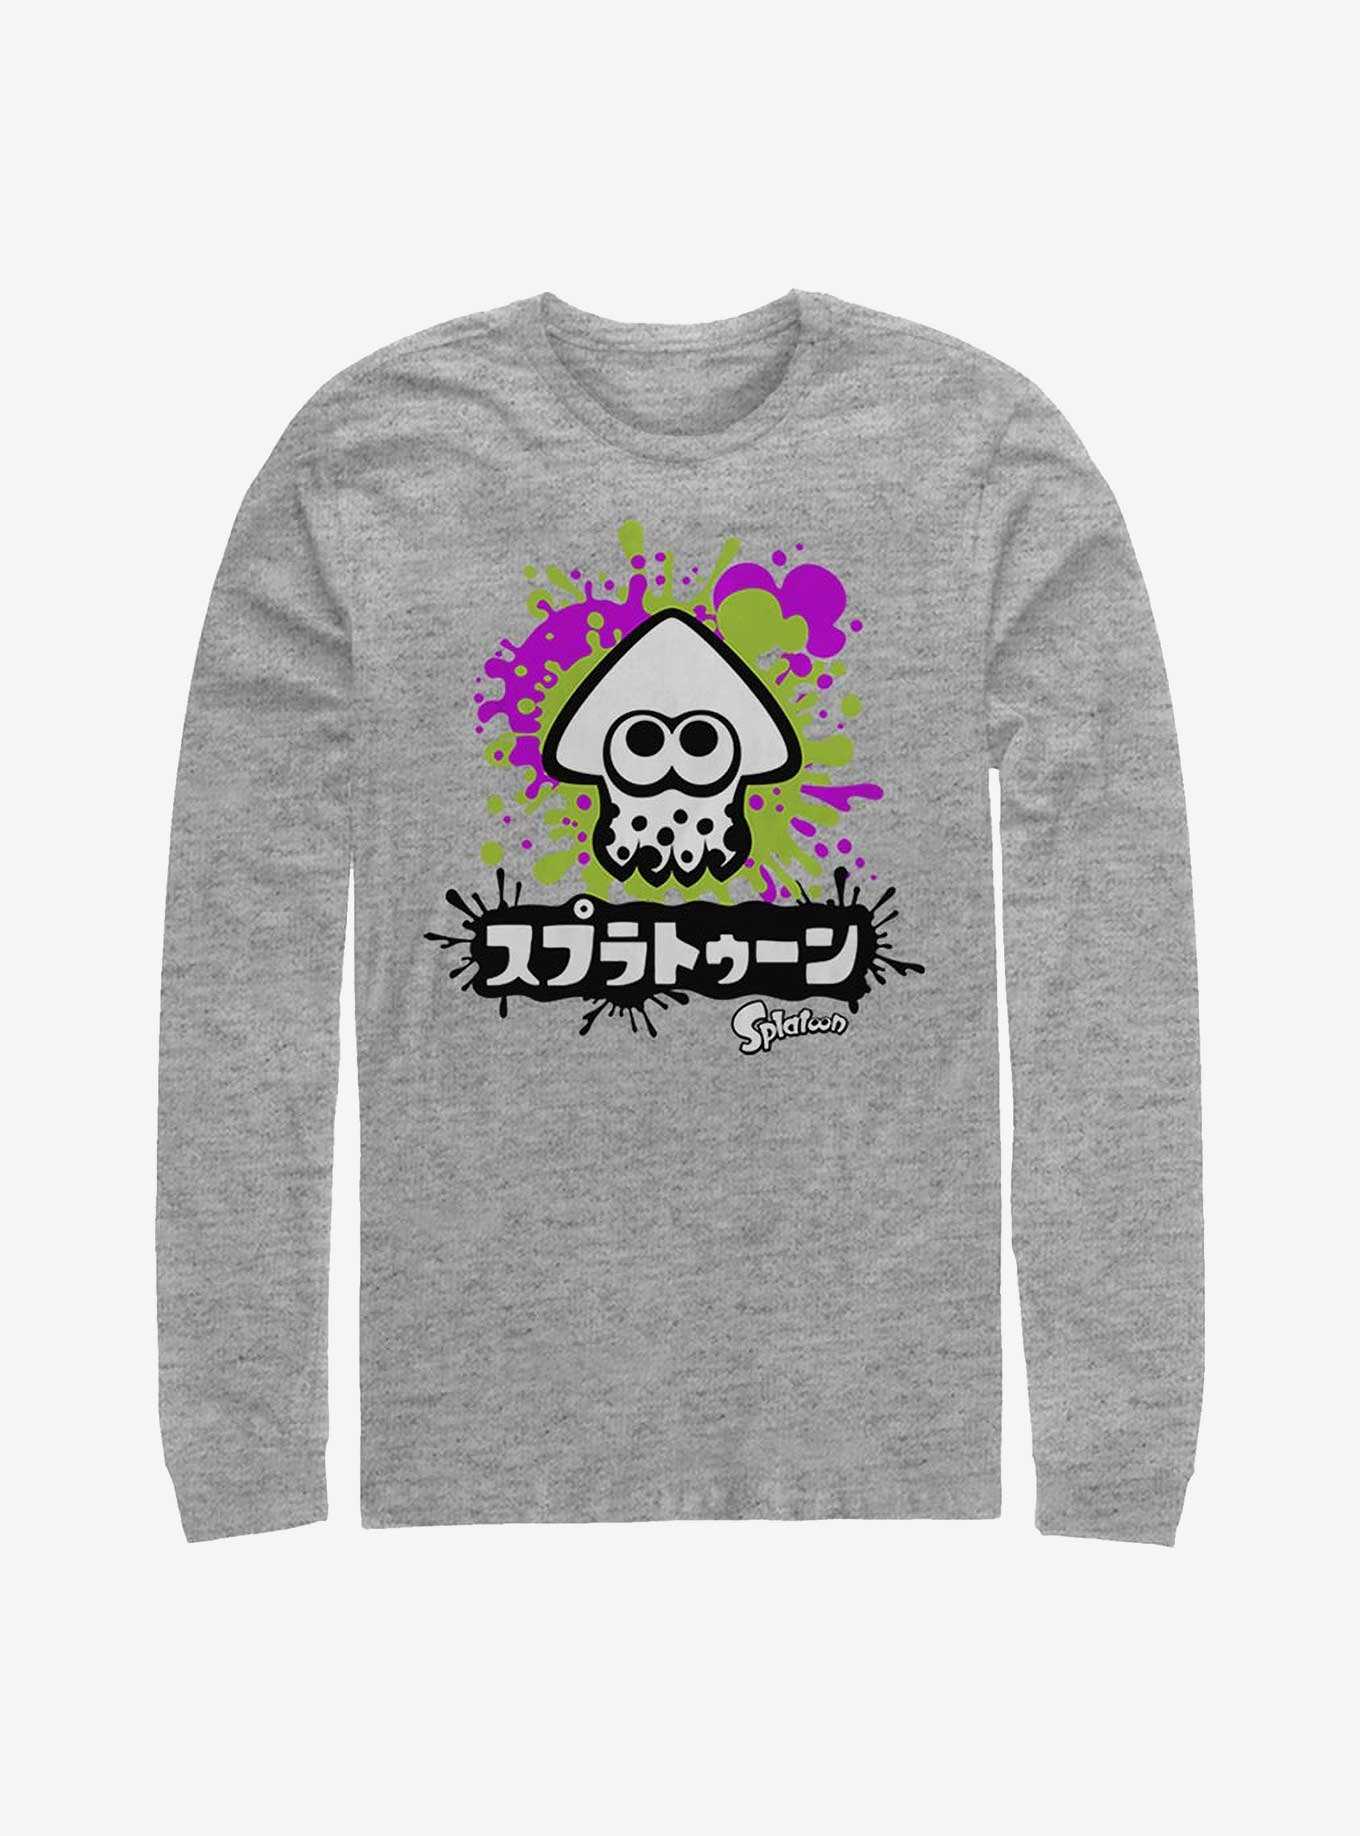 Nintendo Splatoon Inkling Squid Long-Sleeve T-Shirt, , hi-res